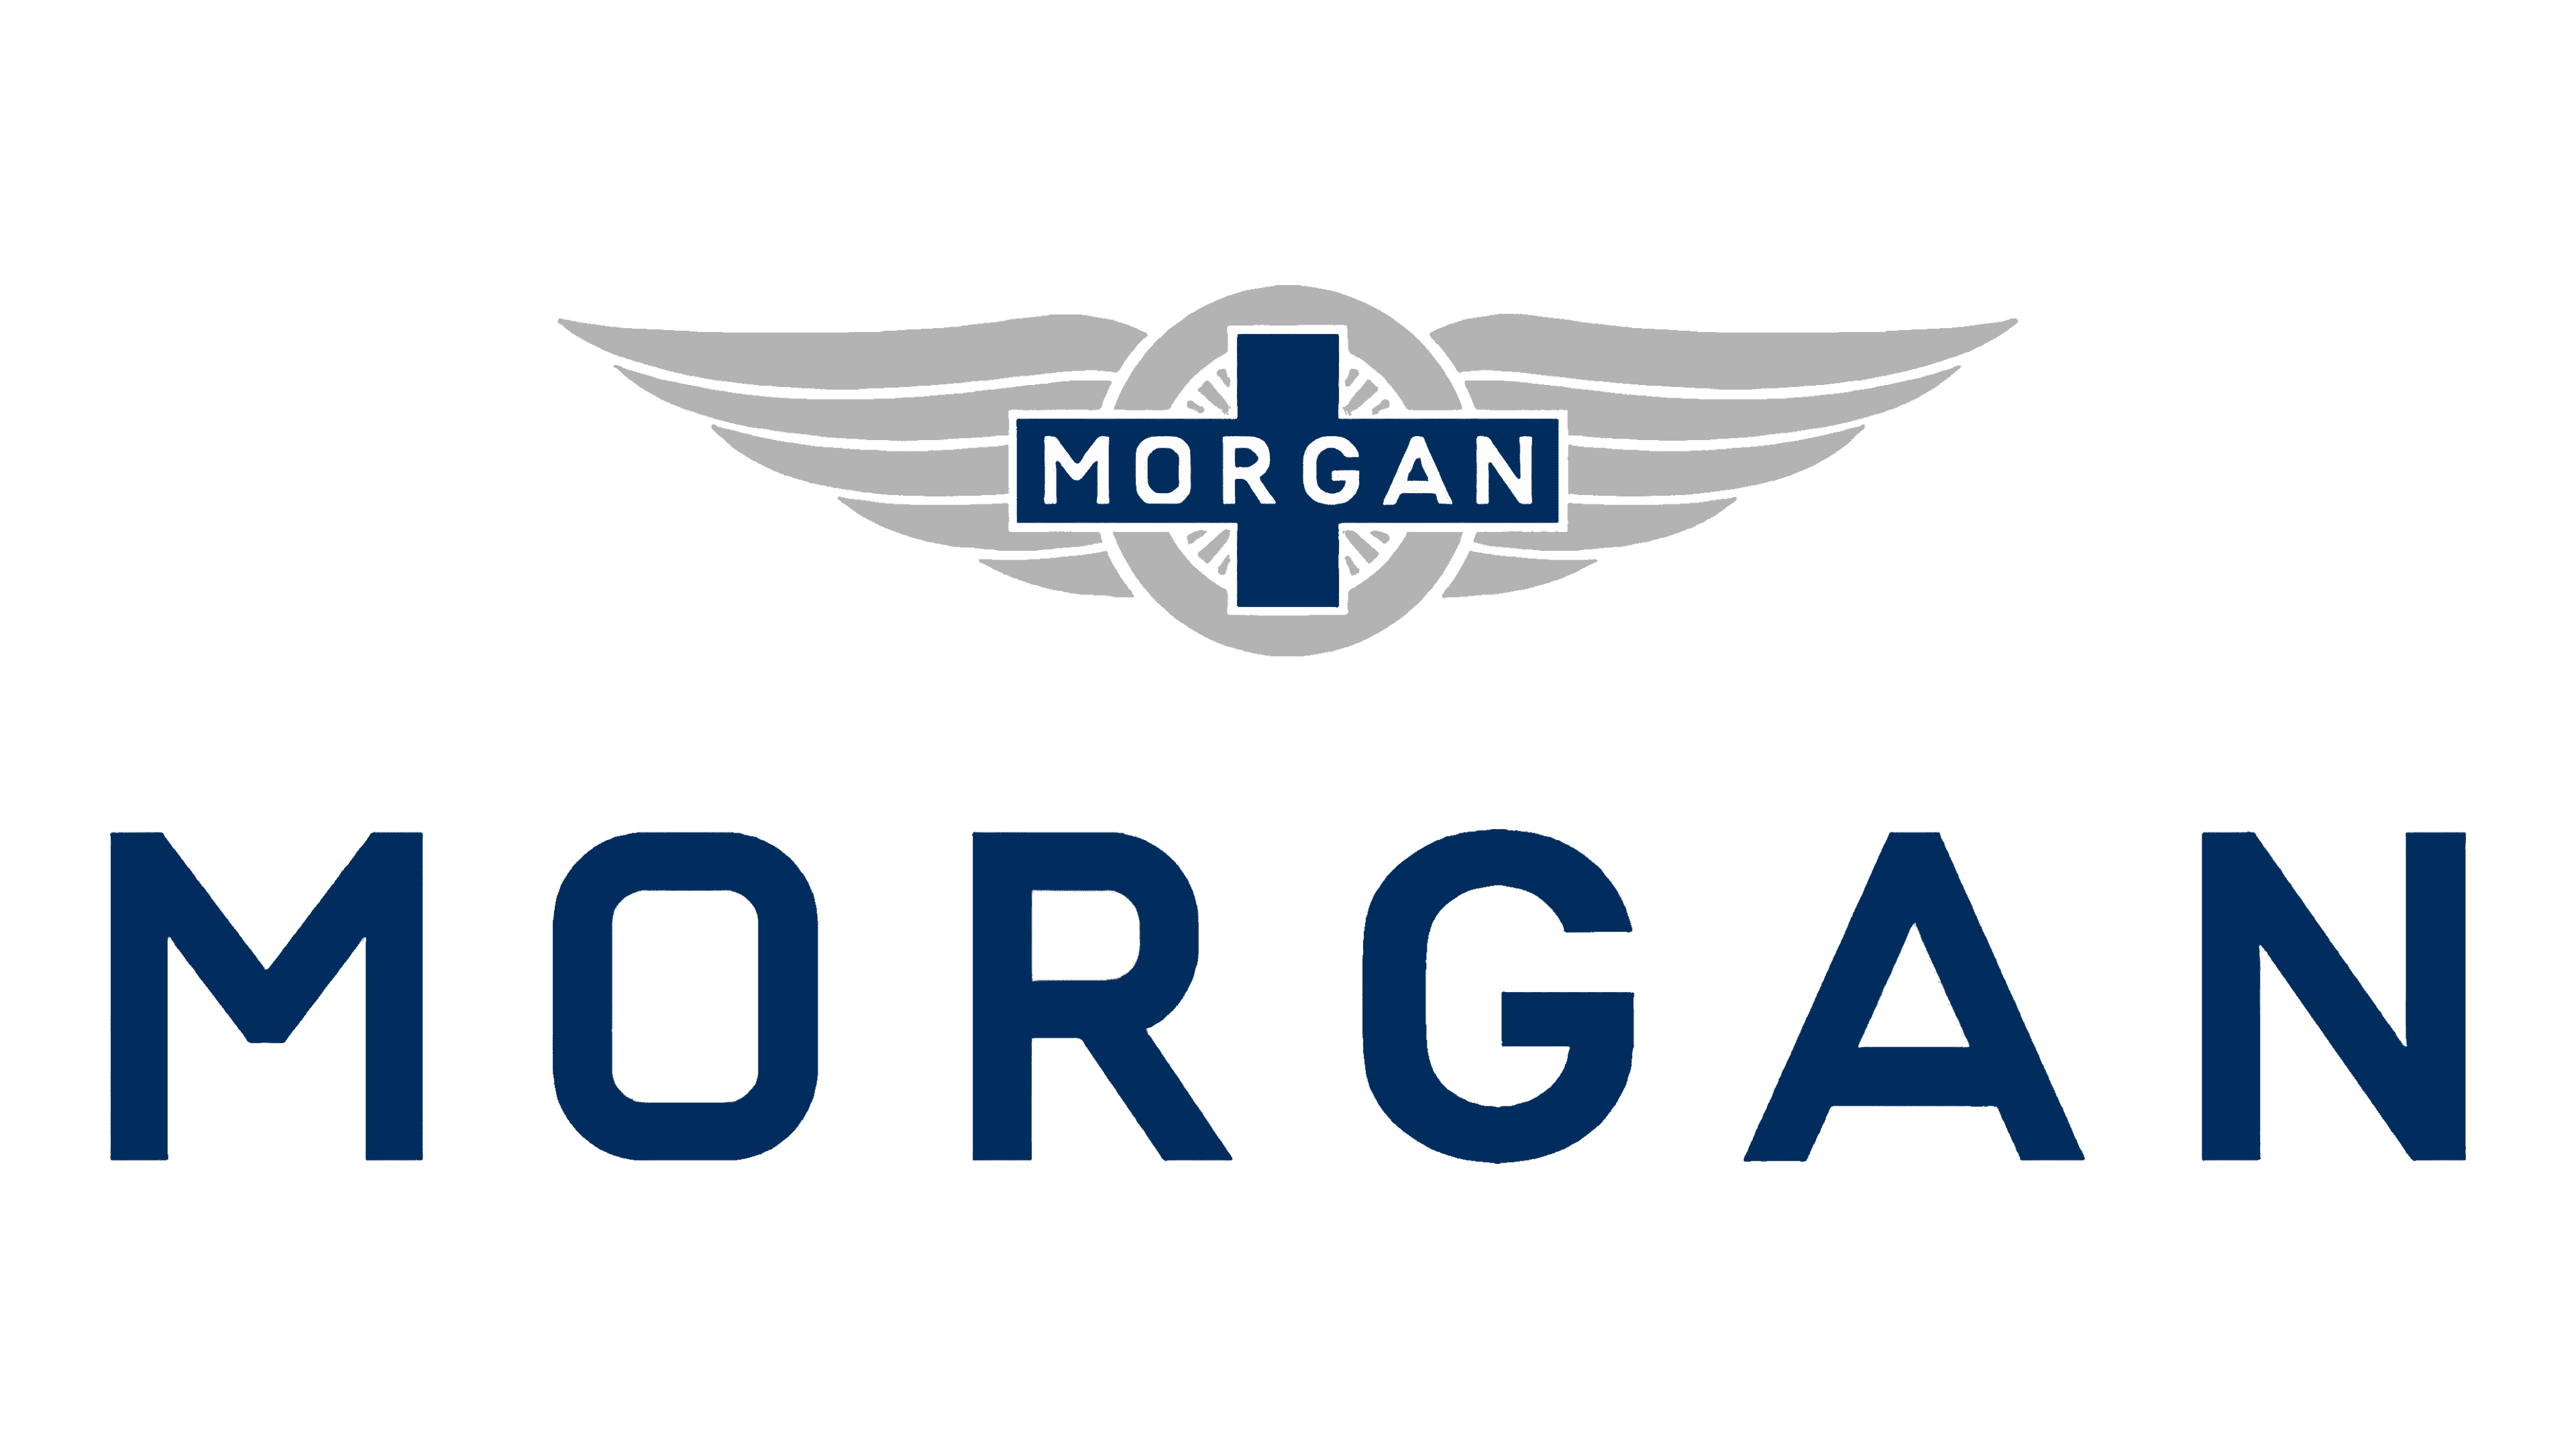 Morgan Motor Company Logo and symbol, meaning, history, PNG, brand